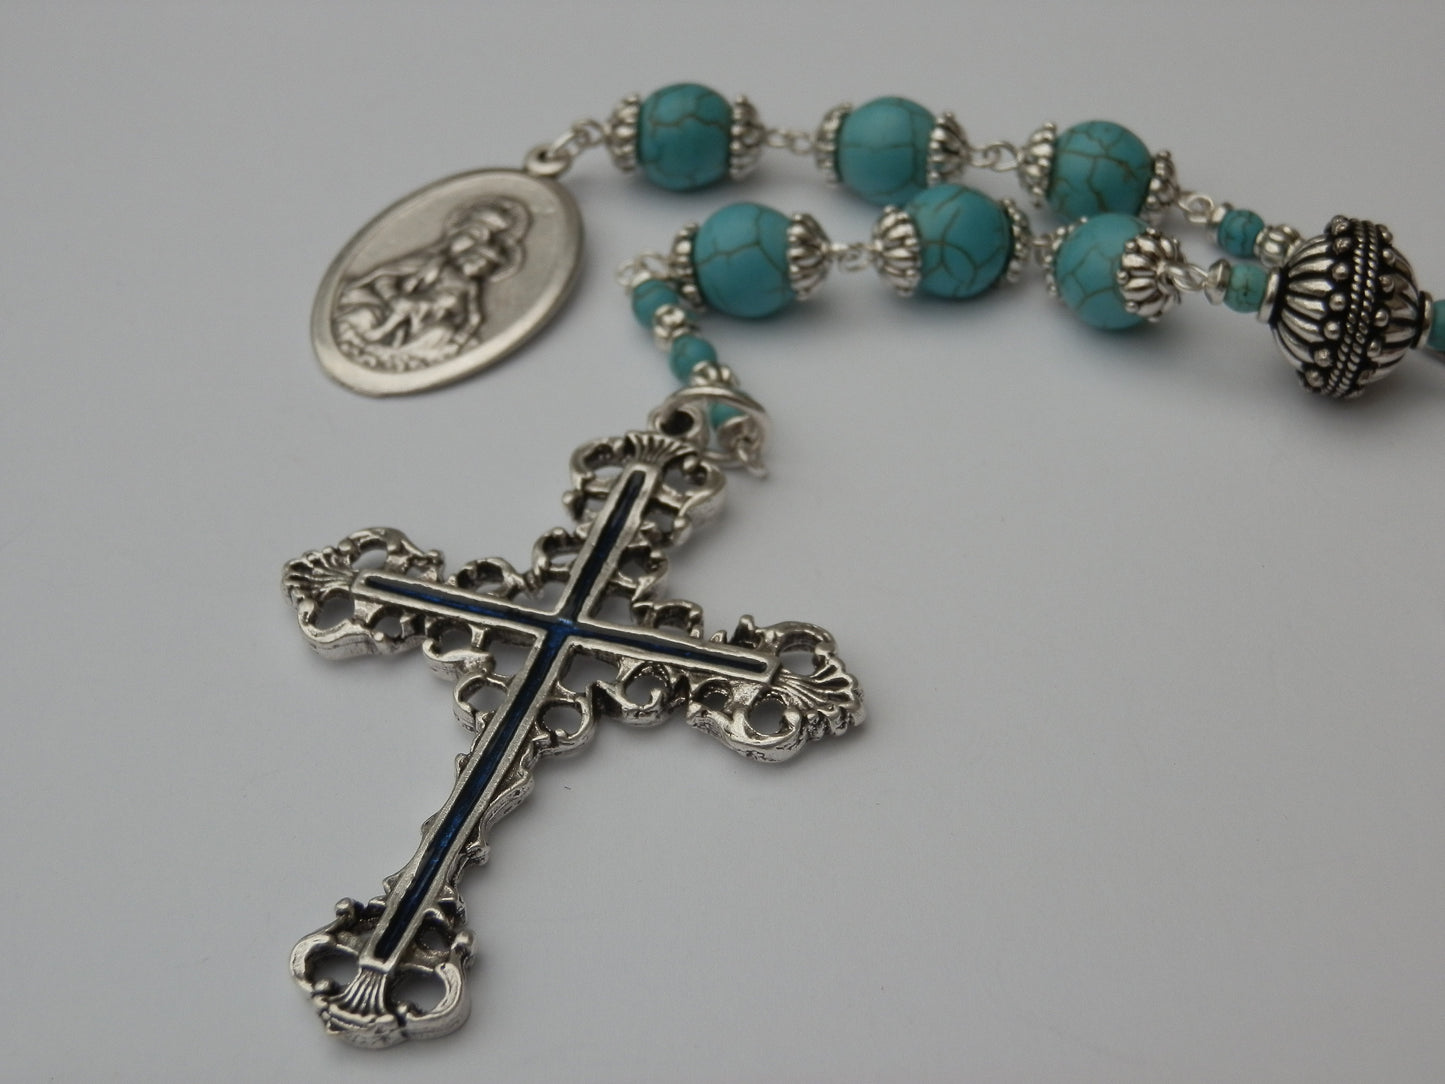 Handmade Turquoise Conversion prayer Chaplet, Sacred Heart medal, Three Hail Mary prayer beads, Spiritual beads, Religious prayer beads.